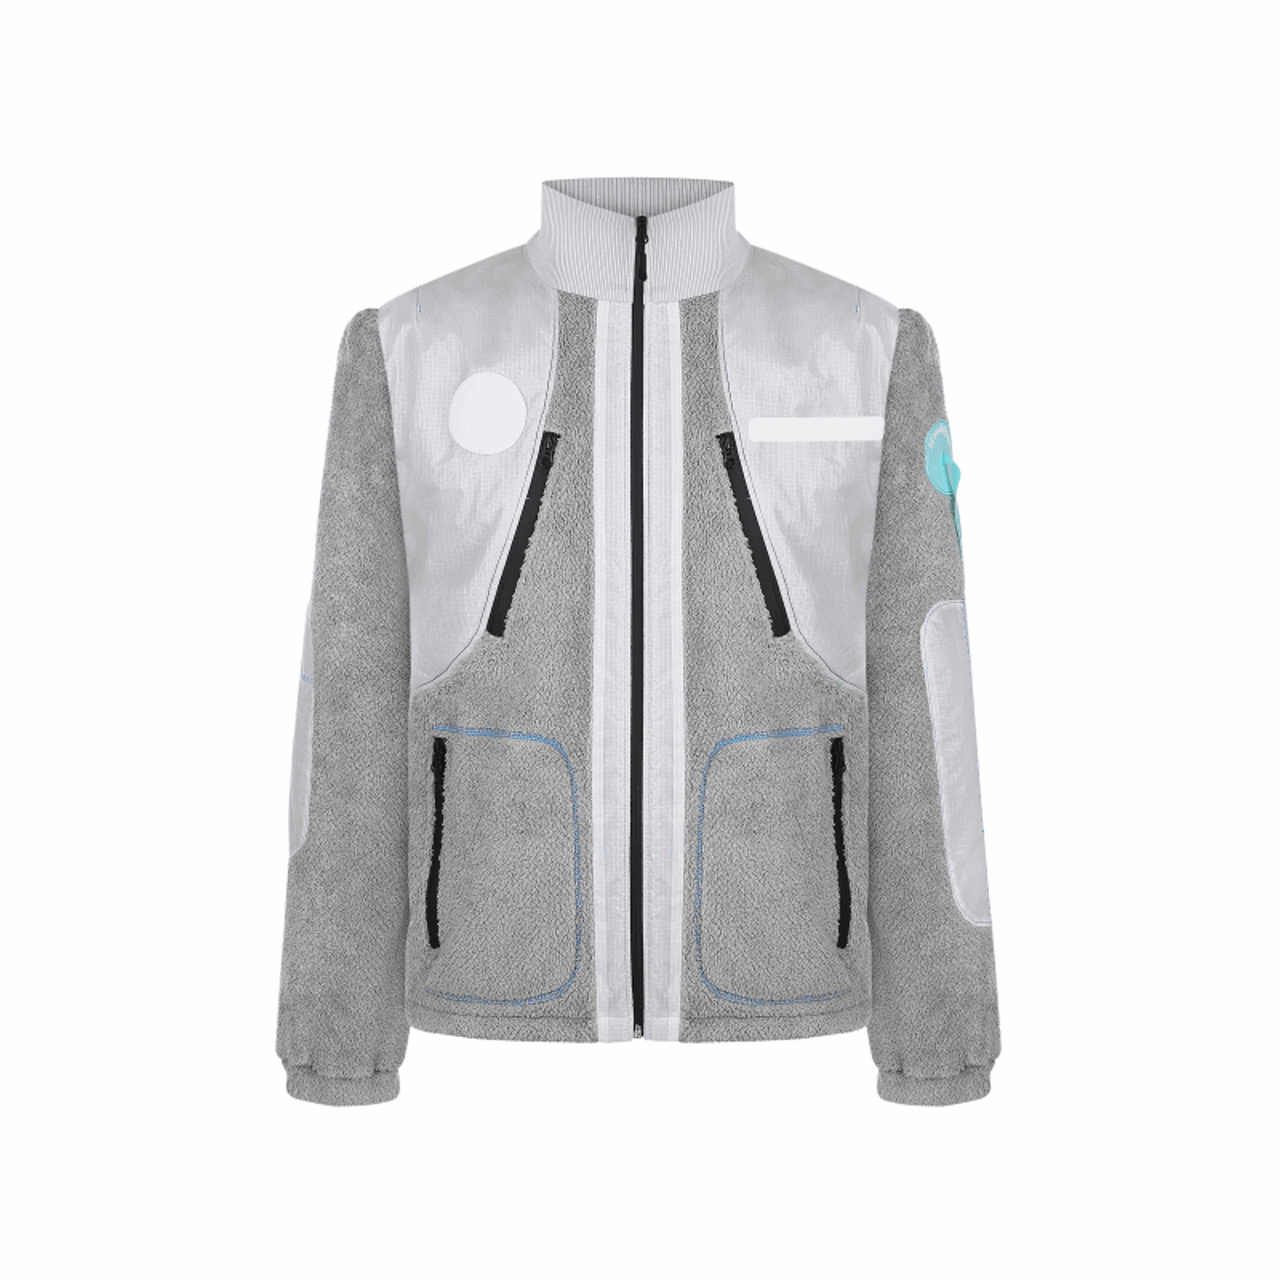 Lightweight Fleece jacket from REwind, Ukraine